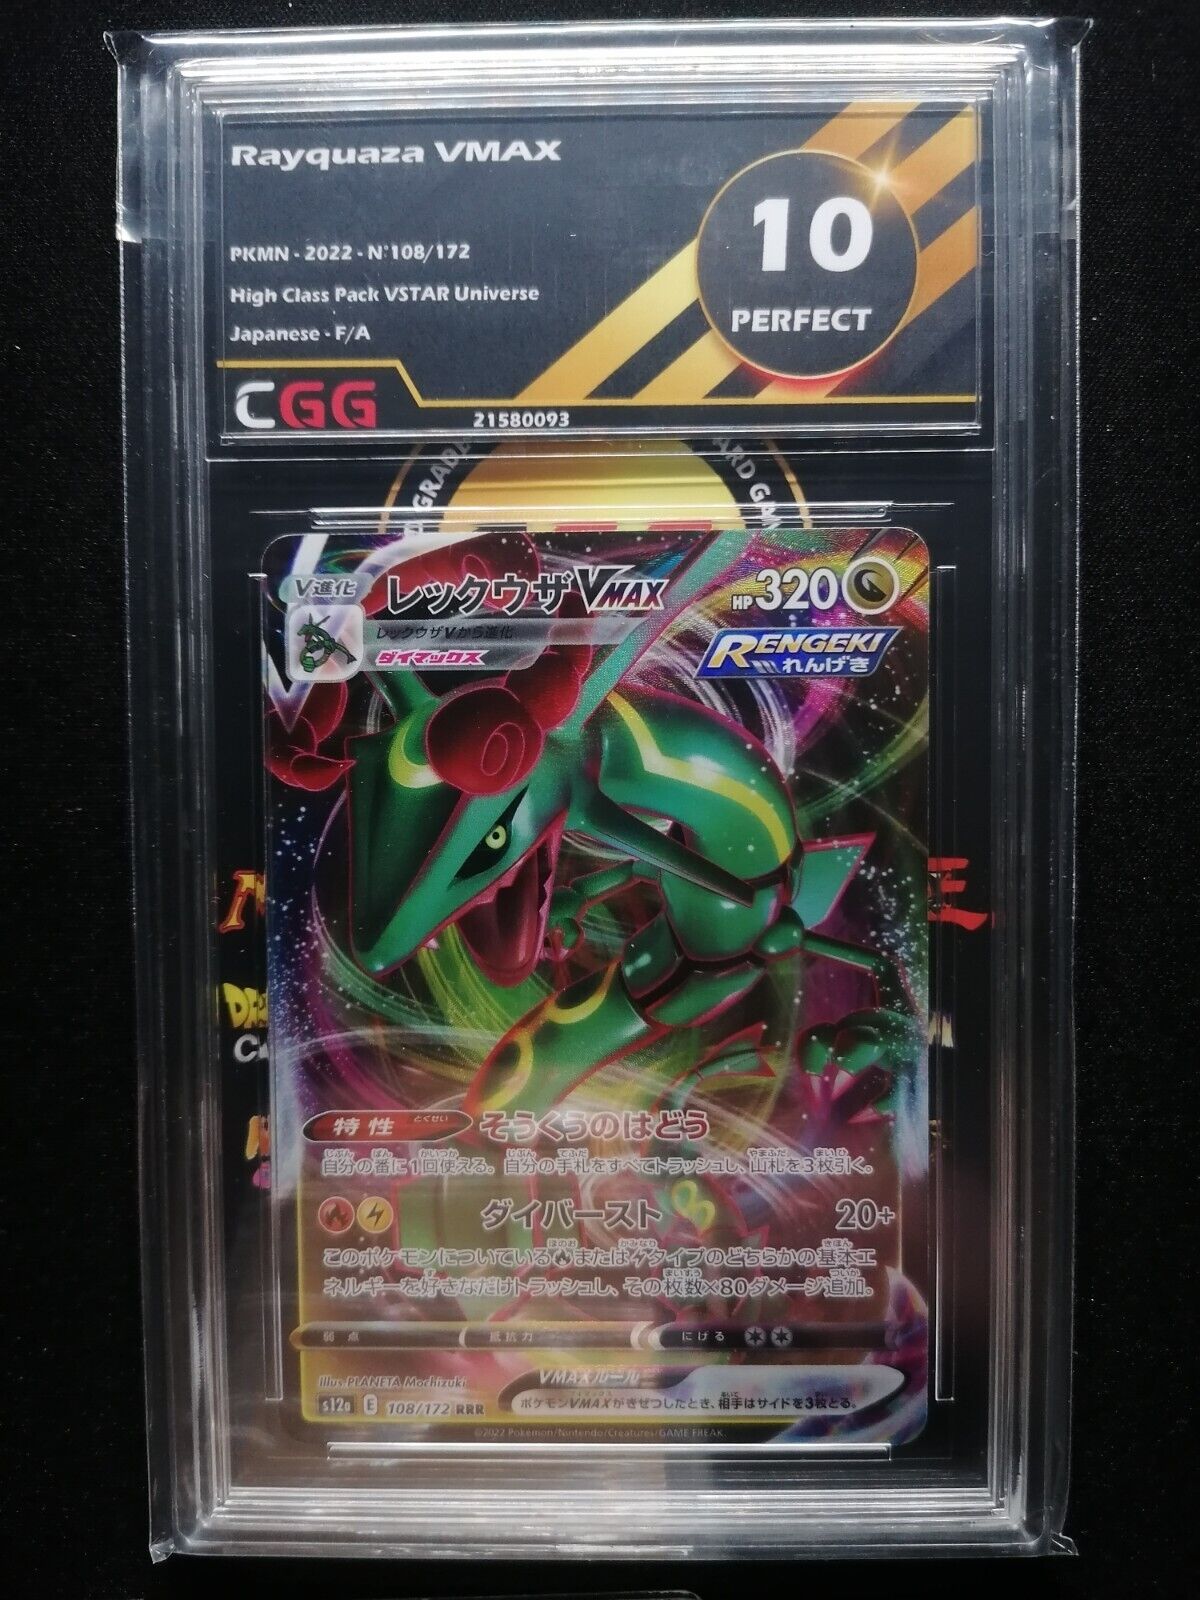 Rayquaza VMAX CGG Graded Card POKEMON S12A Japanese